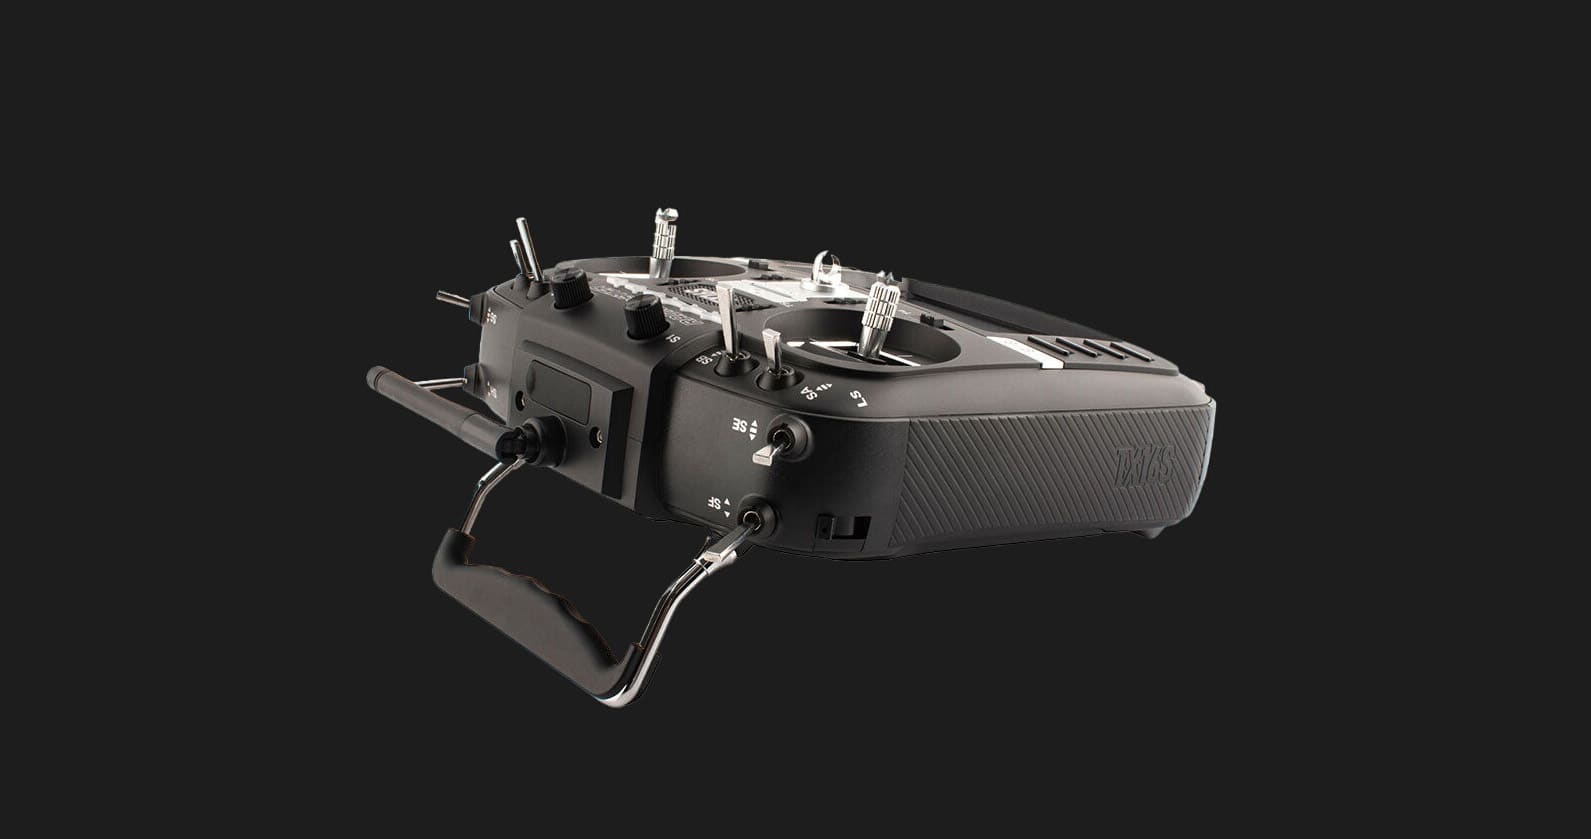 Пульт управления для дрона RadioMaster TX16S MKII HALL V4.0 ELRS